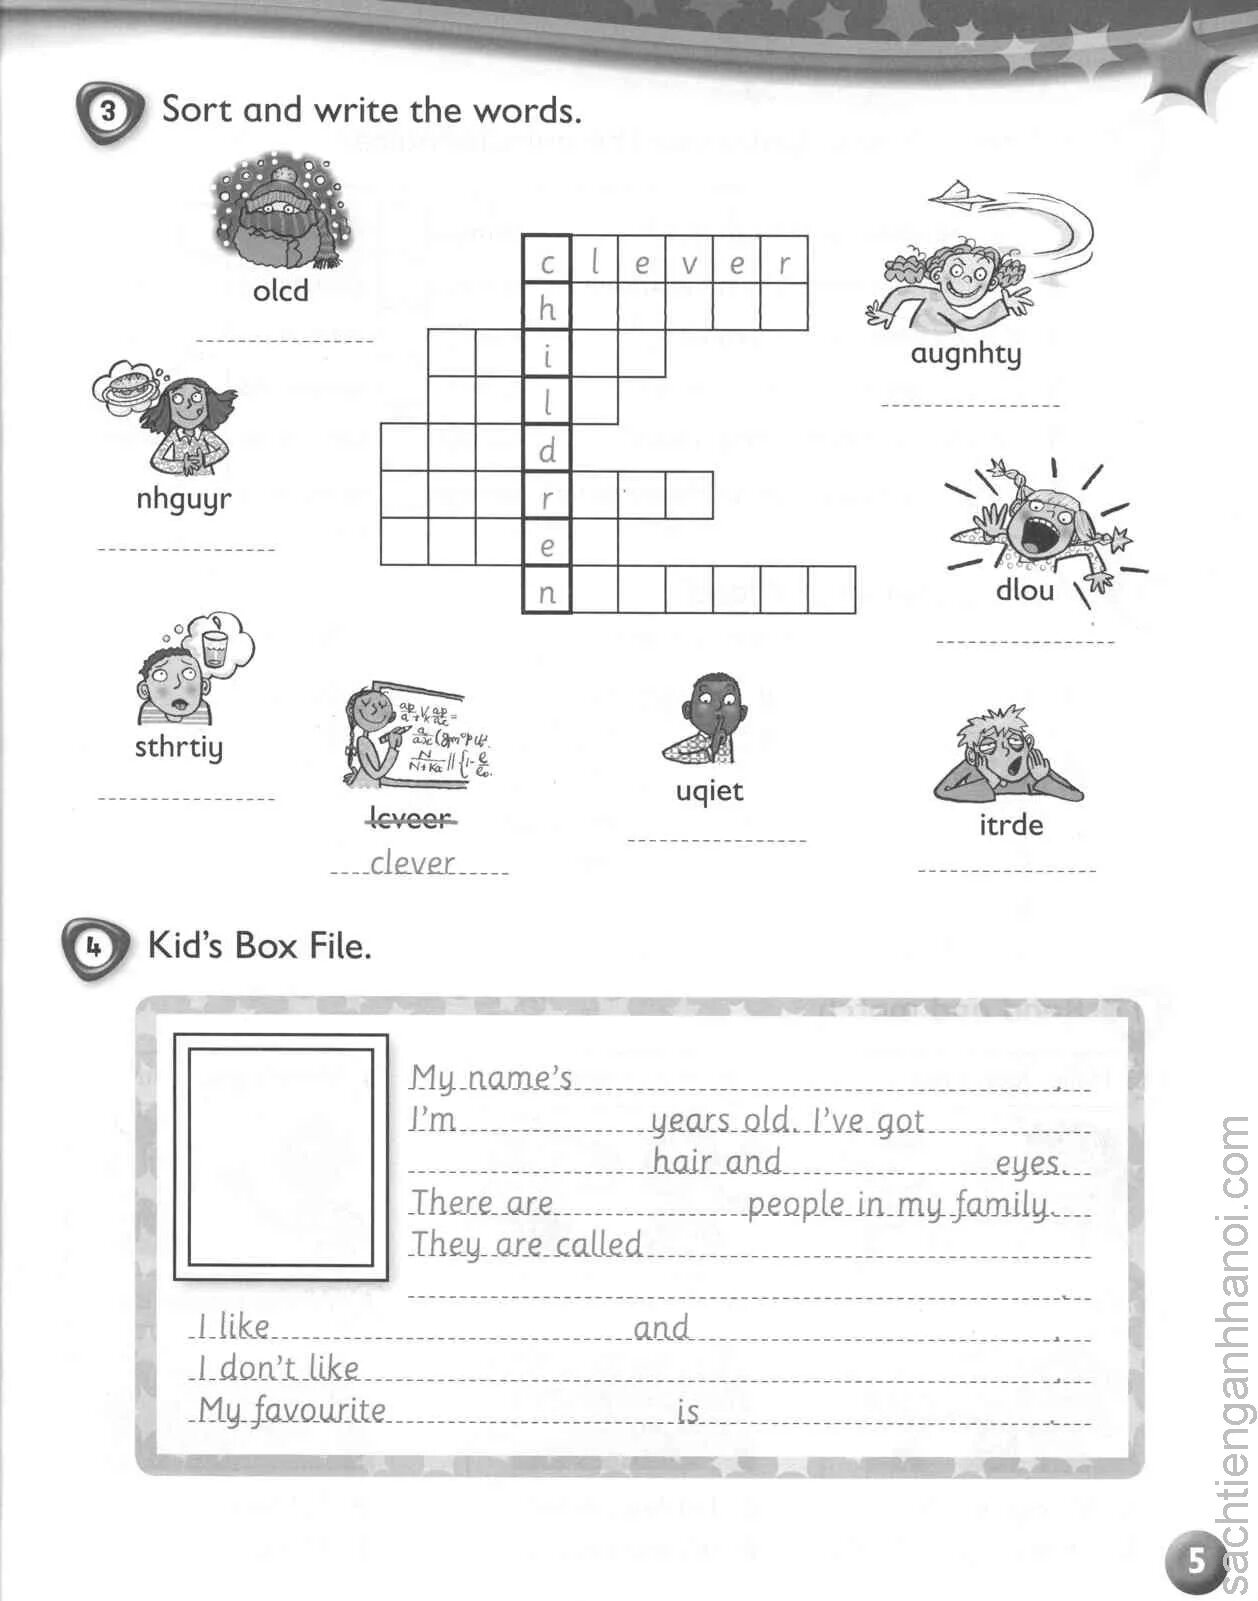 КИД бокс 2 рабочая тетрадь. Kids Box 2 activity book ответы. Kids Box 4 activity book ответы рабочая тетрадь. Kids Box 4 activity book ответы. Kids box 4 activity book